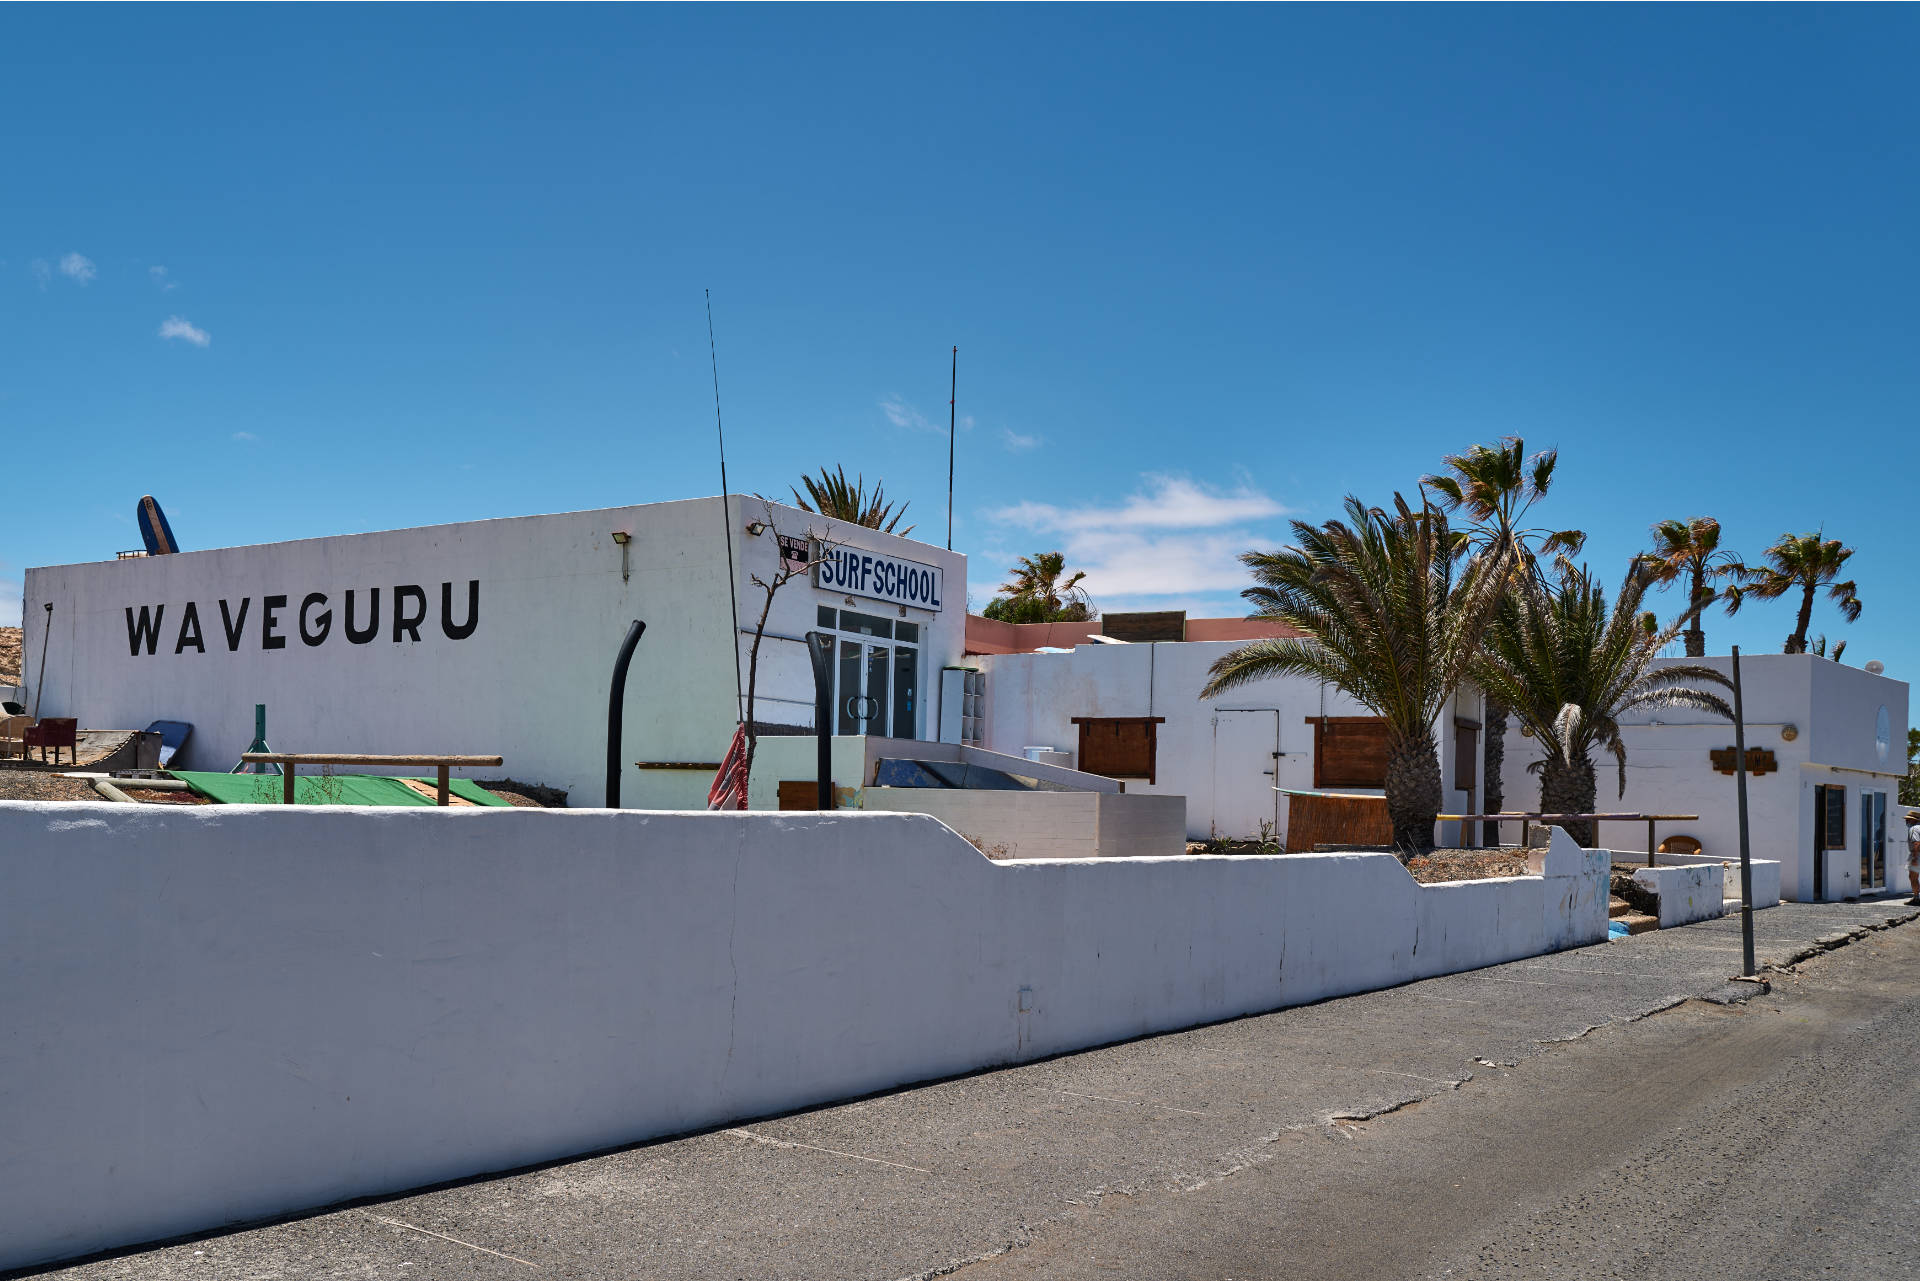 Der Ort La Pared Fuerteventura.